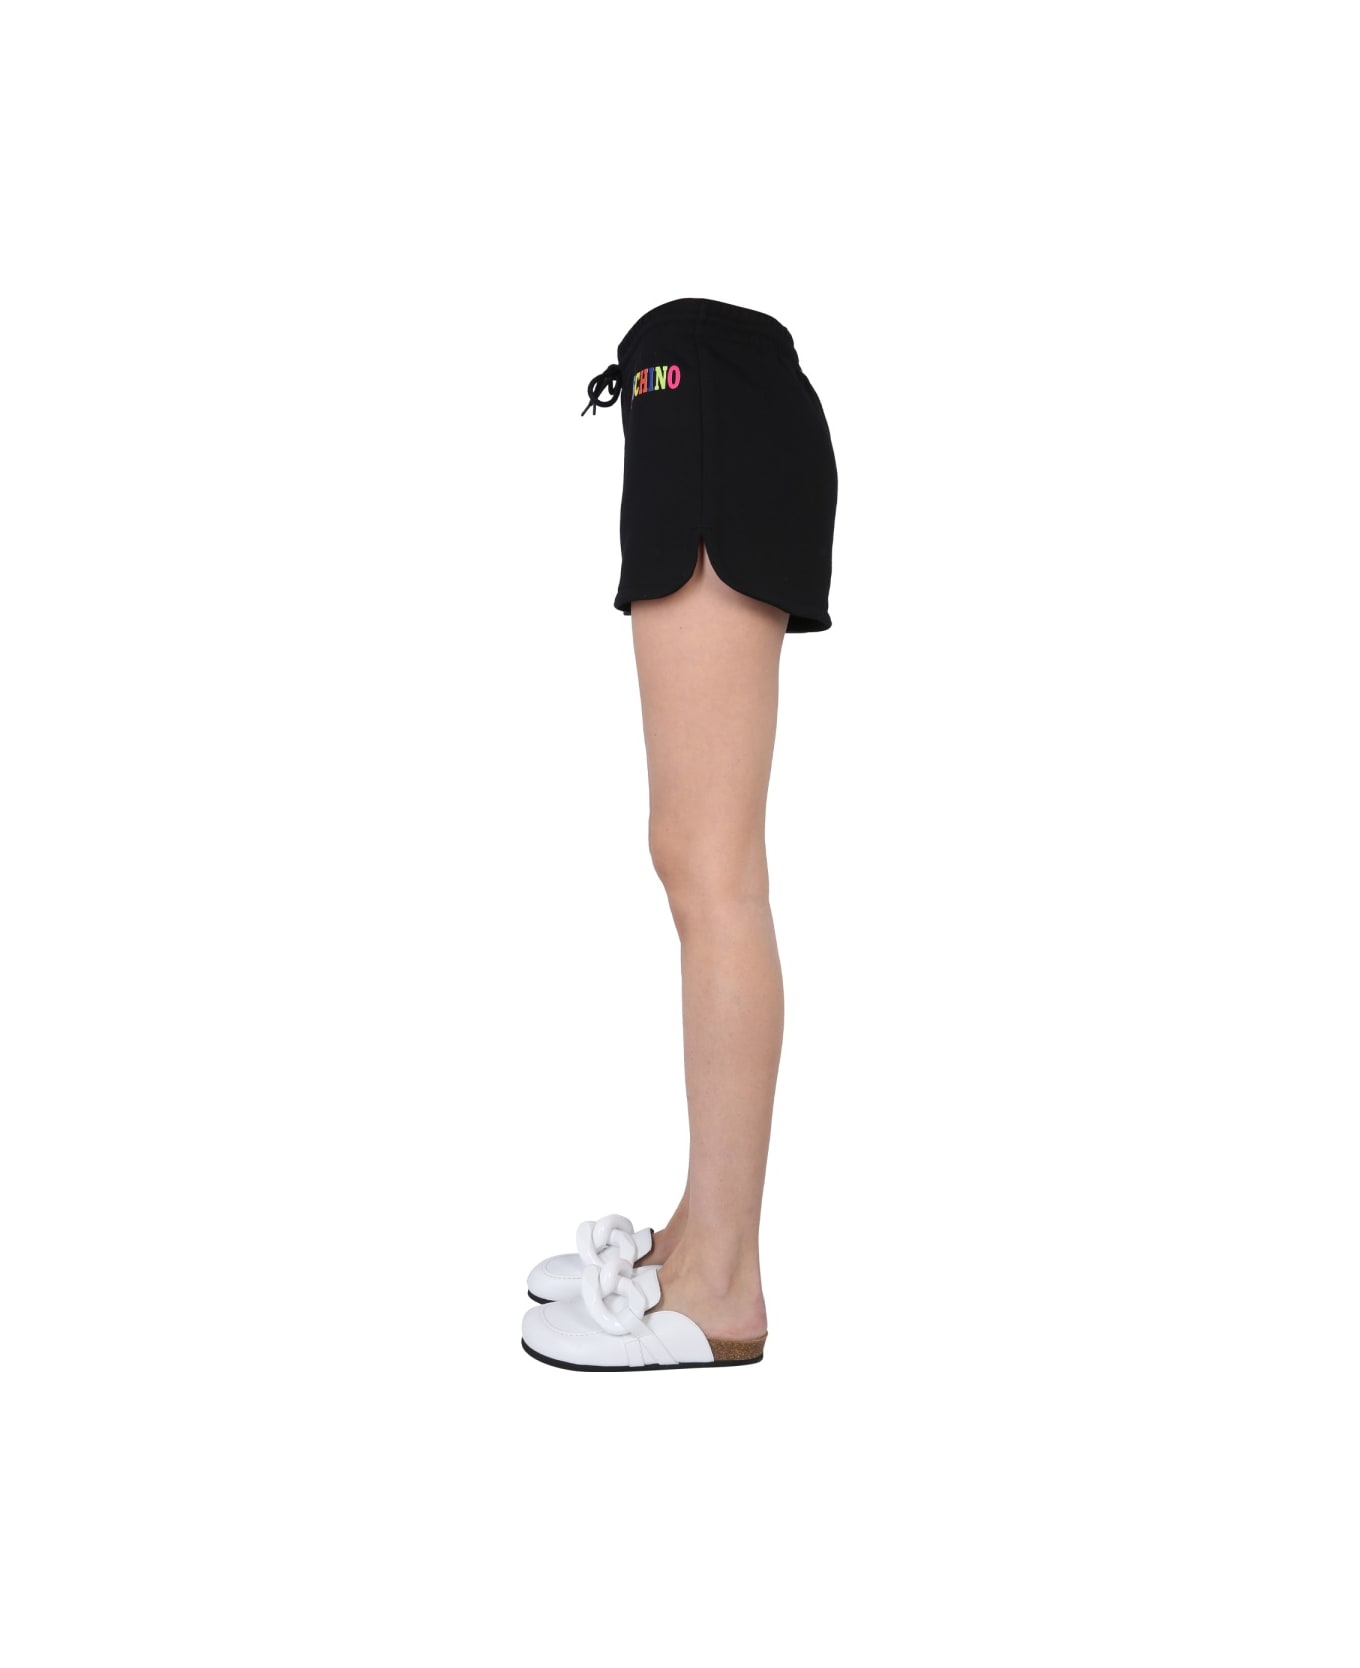 Moschino Multicolor Logo Shorts - BLACK